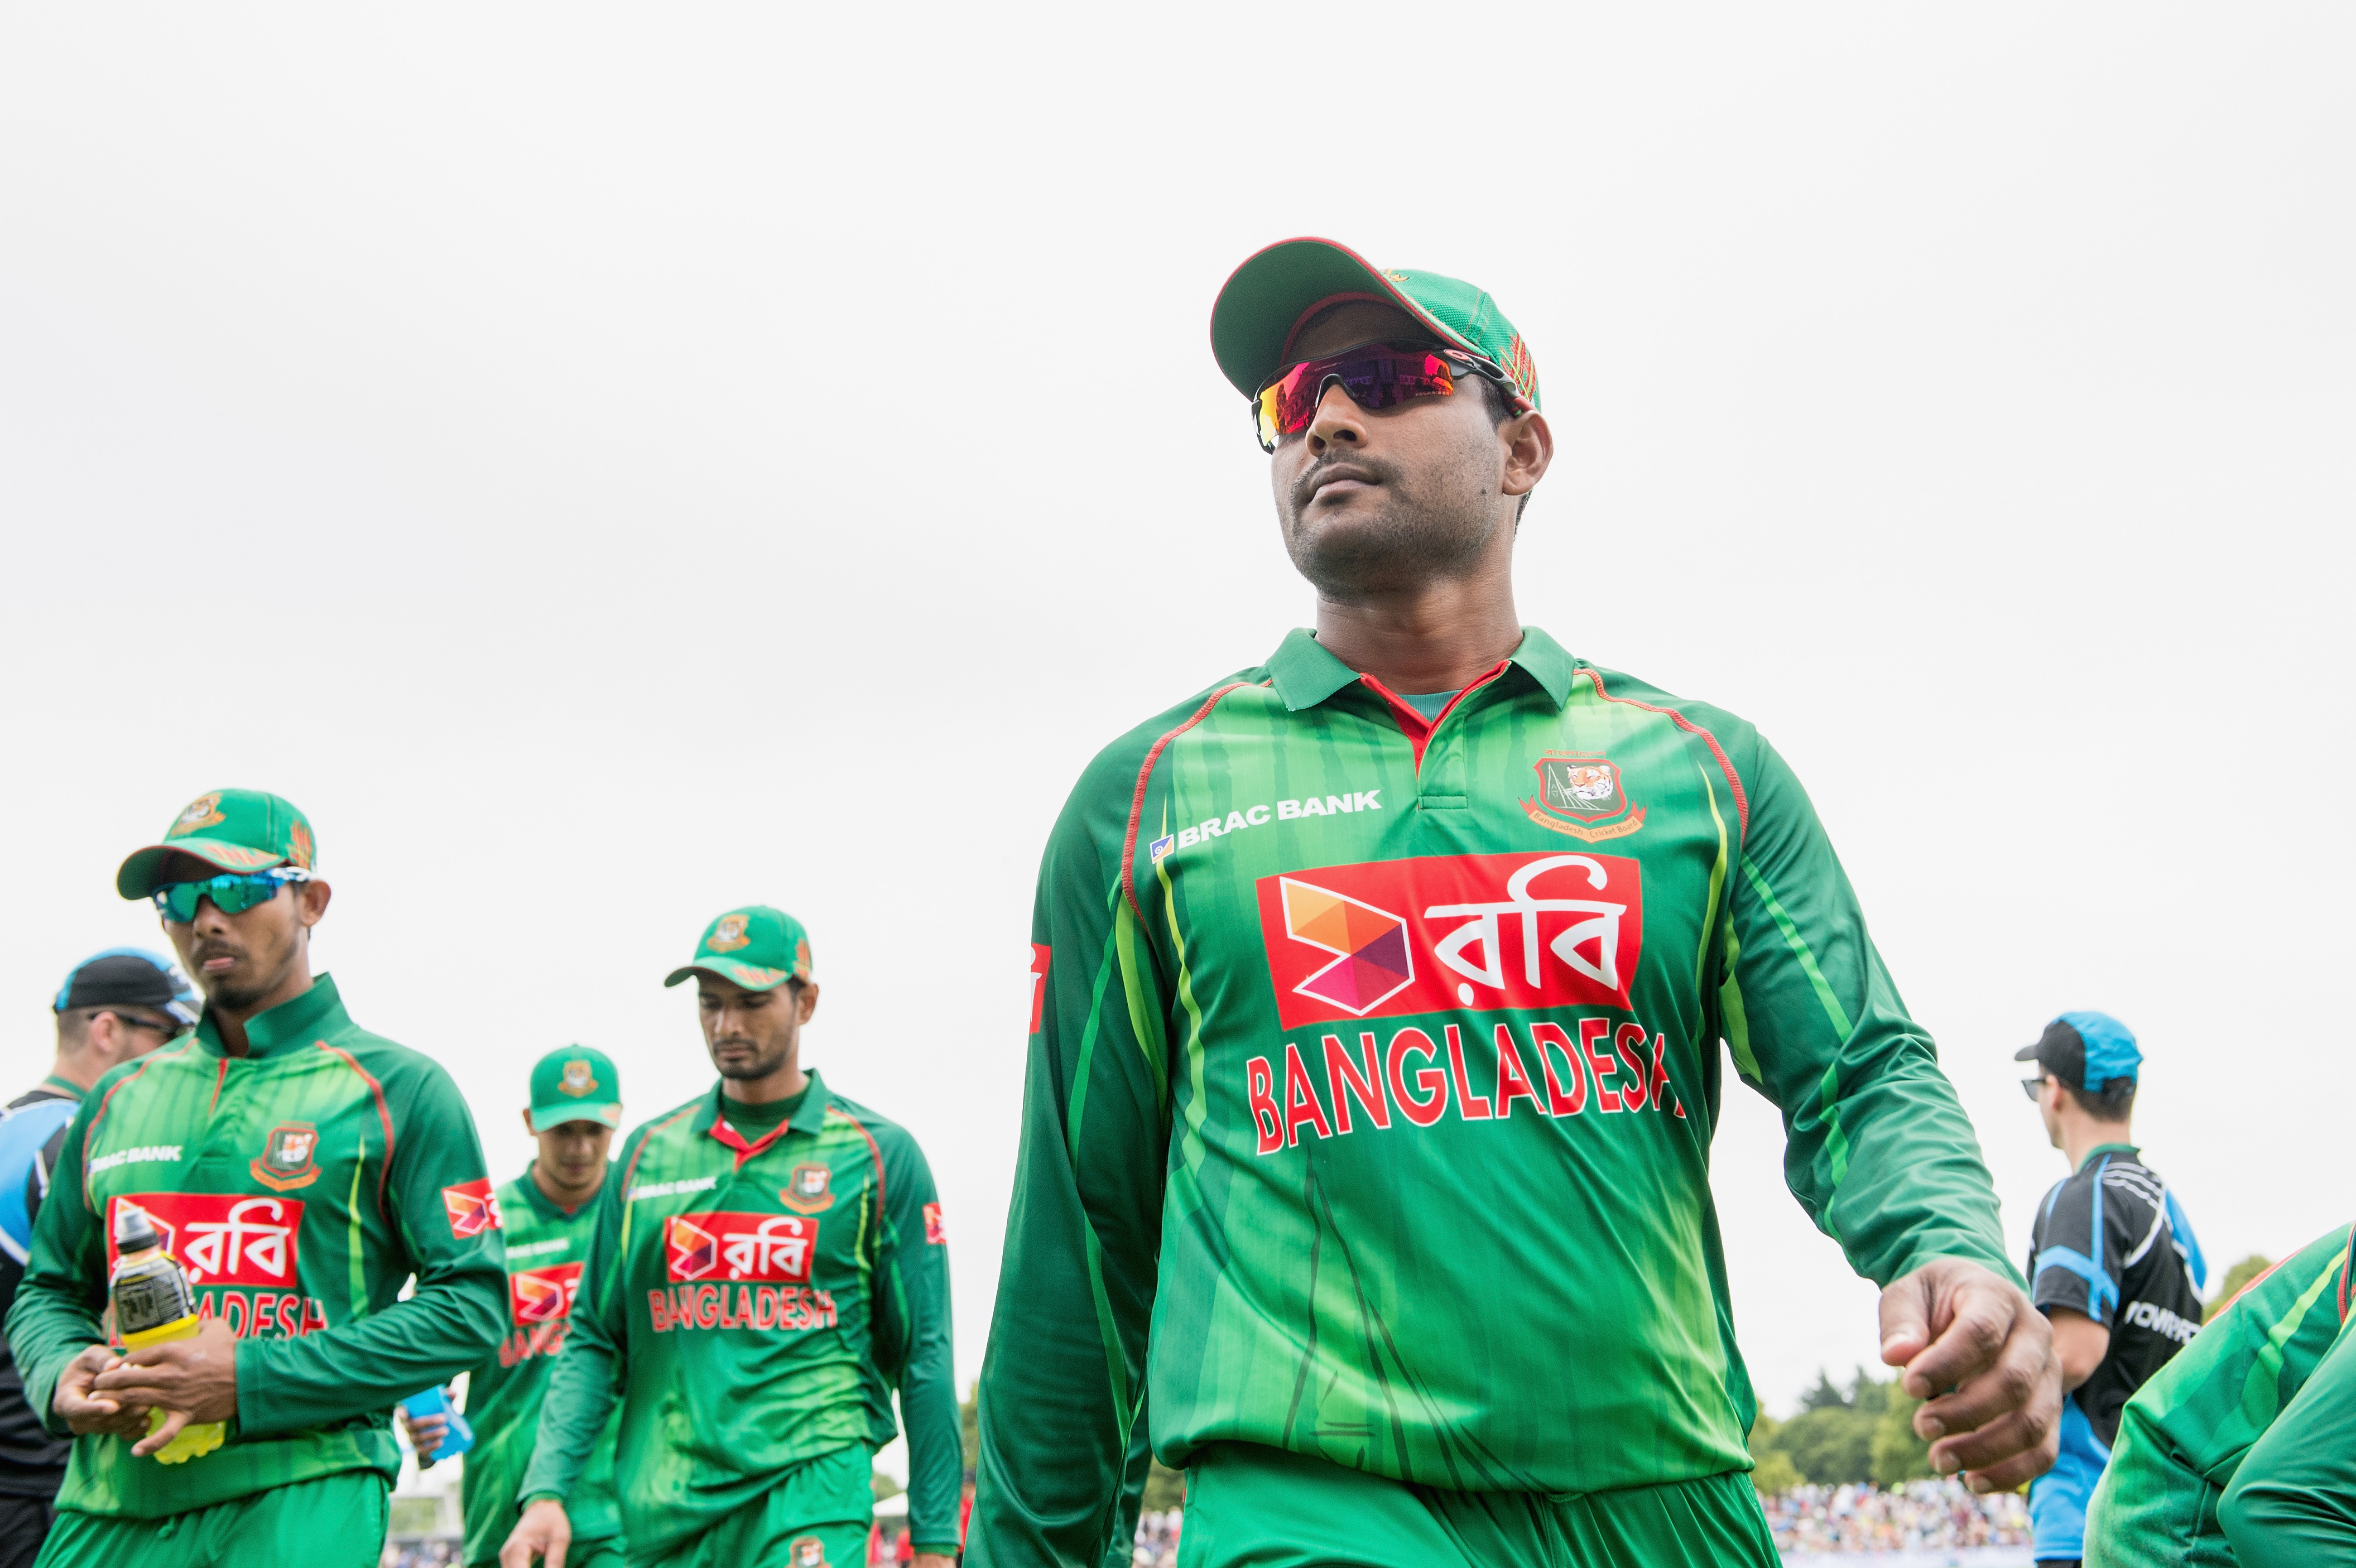 Watch : Bangladesh's Imrul Kayes narrowly avoids a nasty injury while fielding